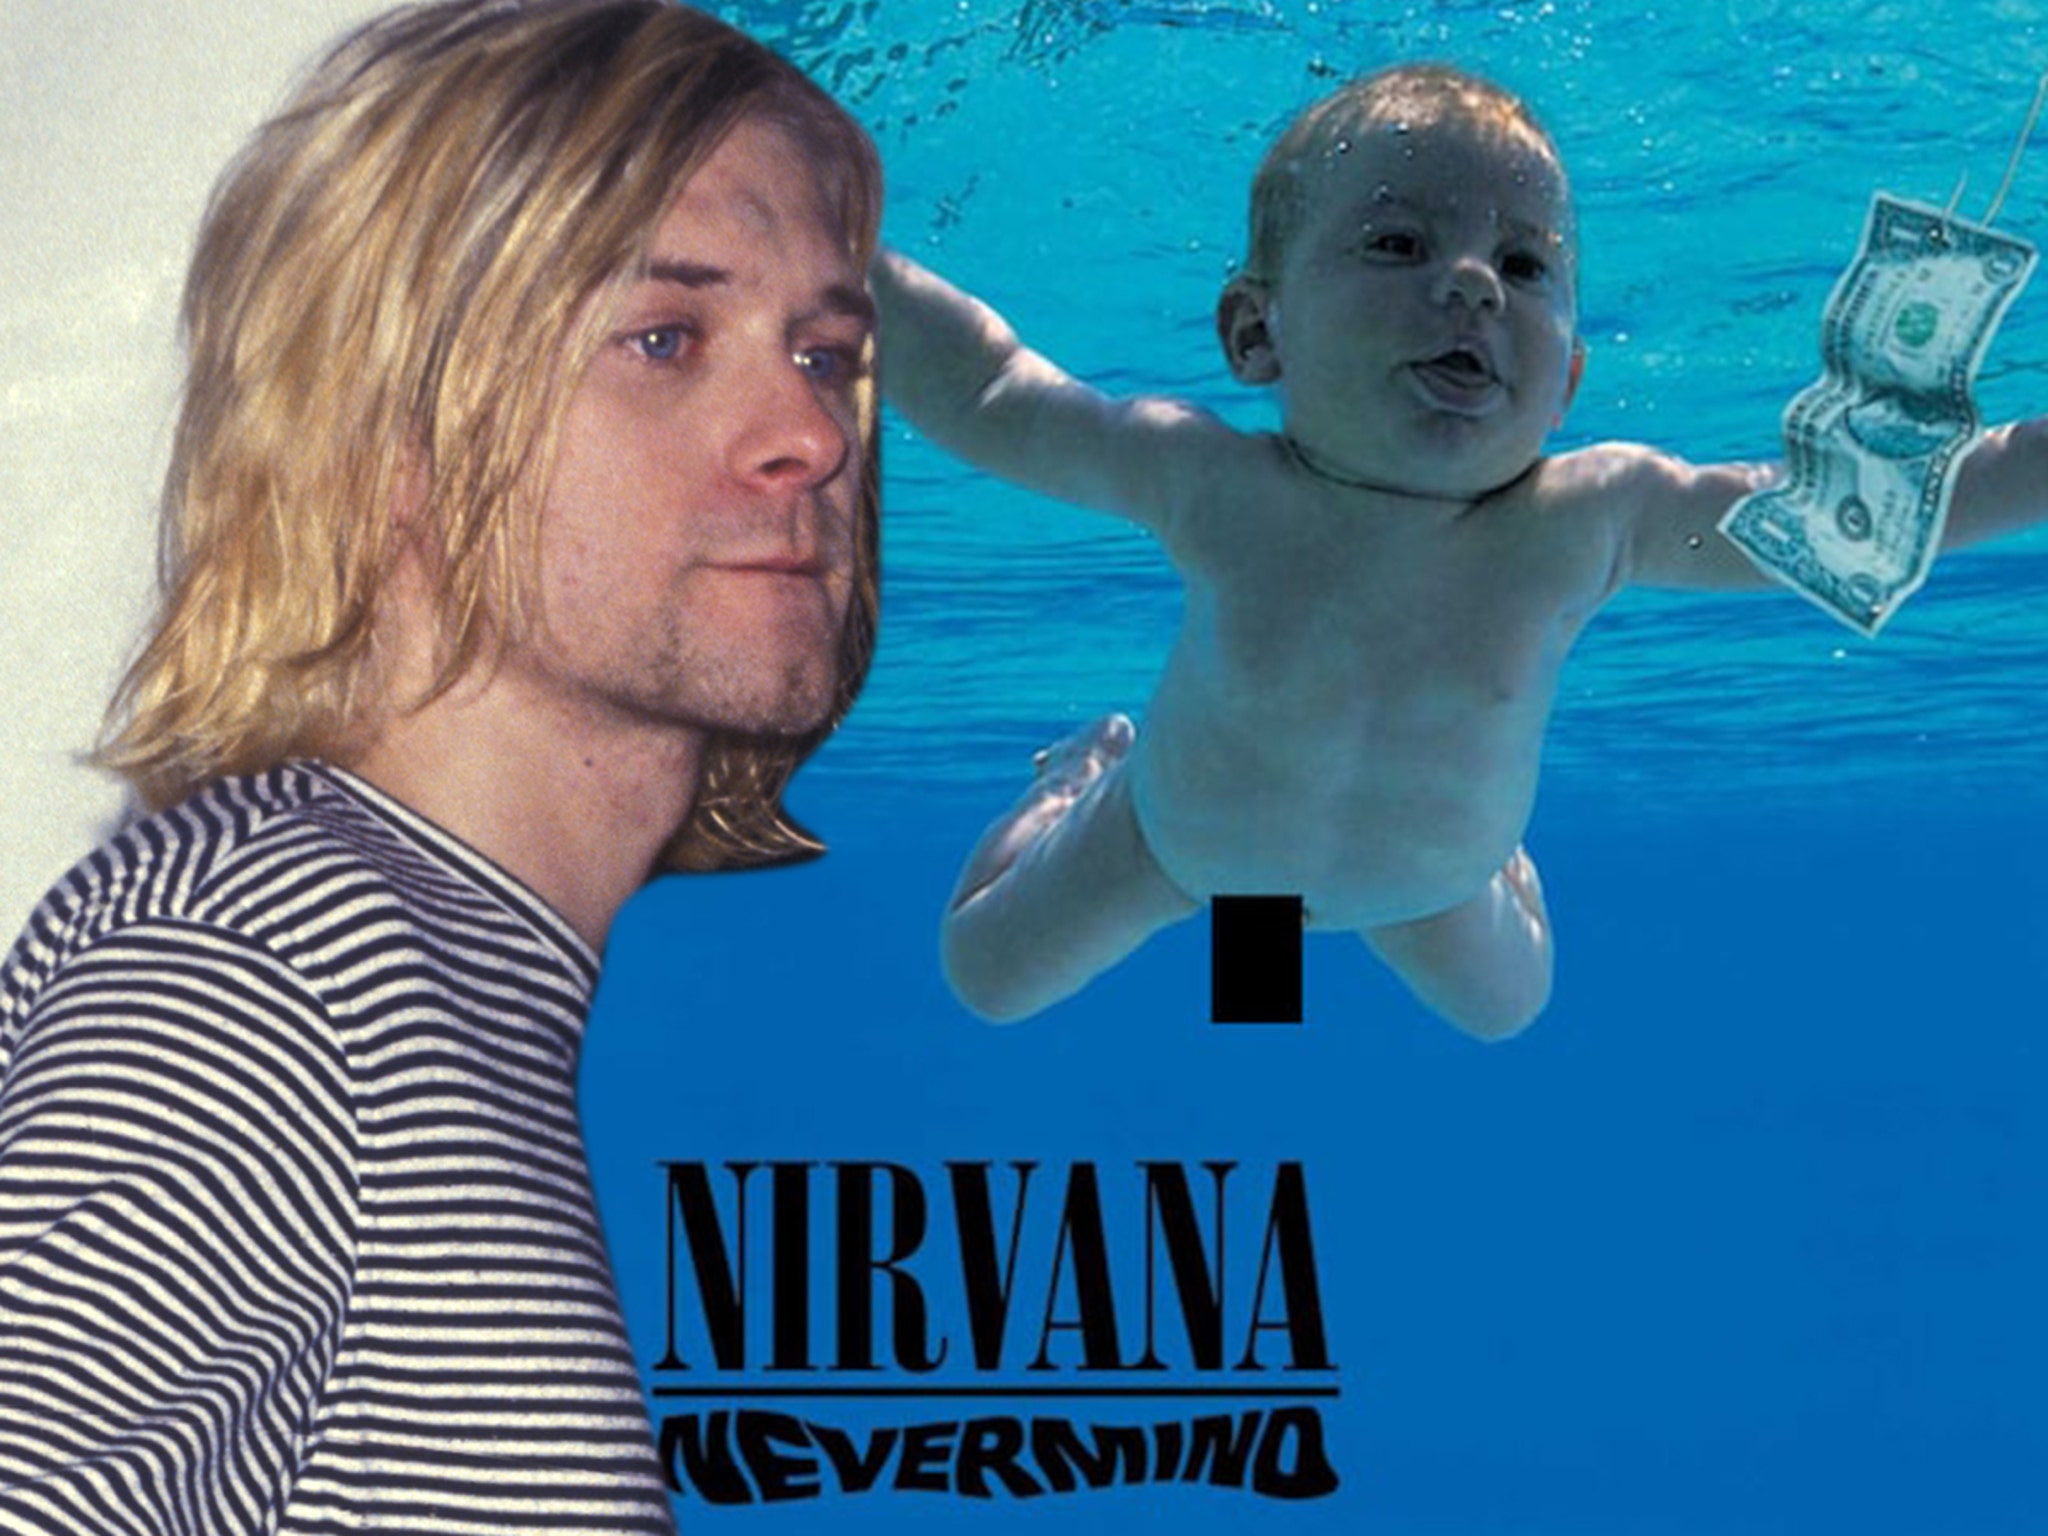 Fake Toddler Porn - Nirvana Child Porn Lawsuit Over 'Nevermind' Album Cover Dismissed